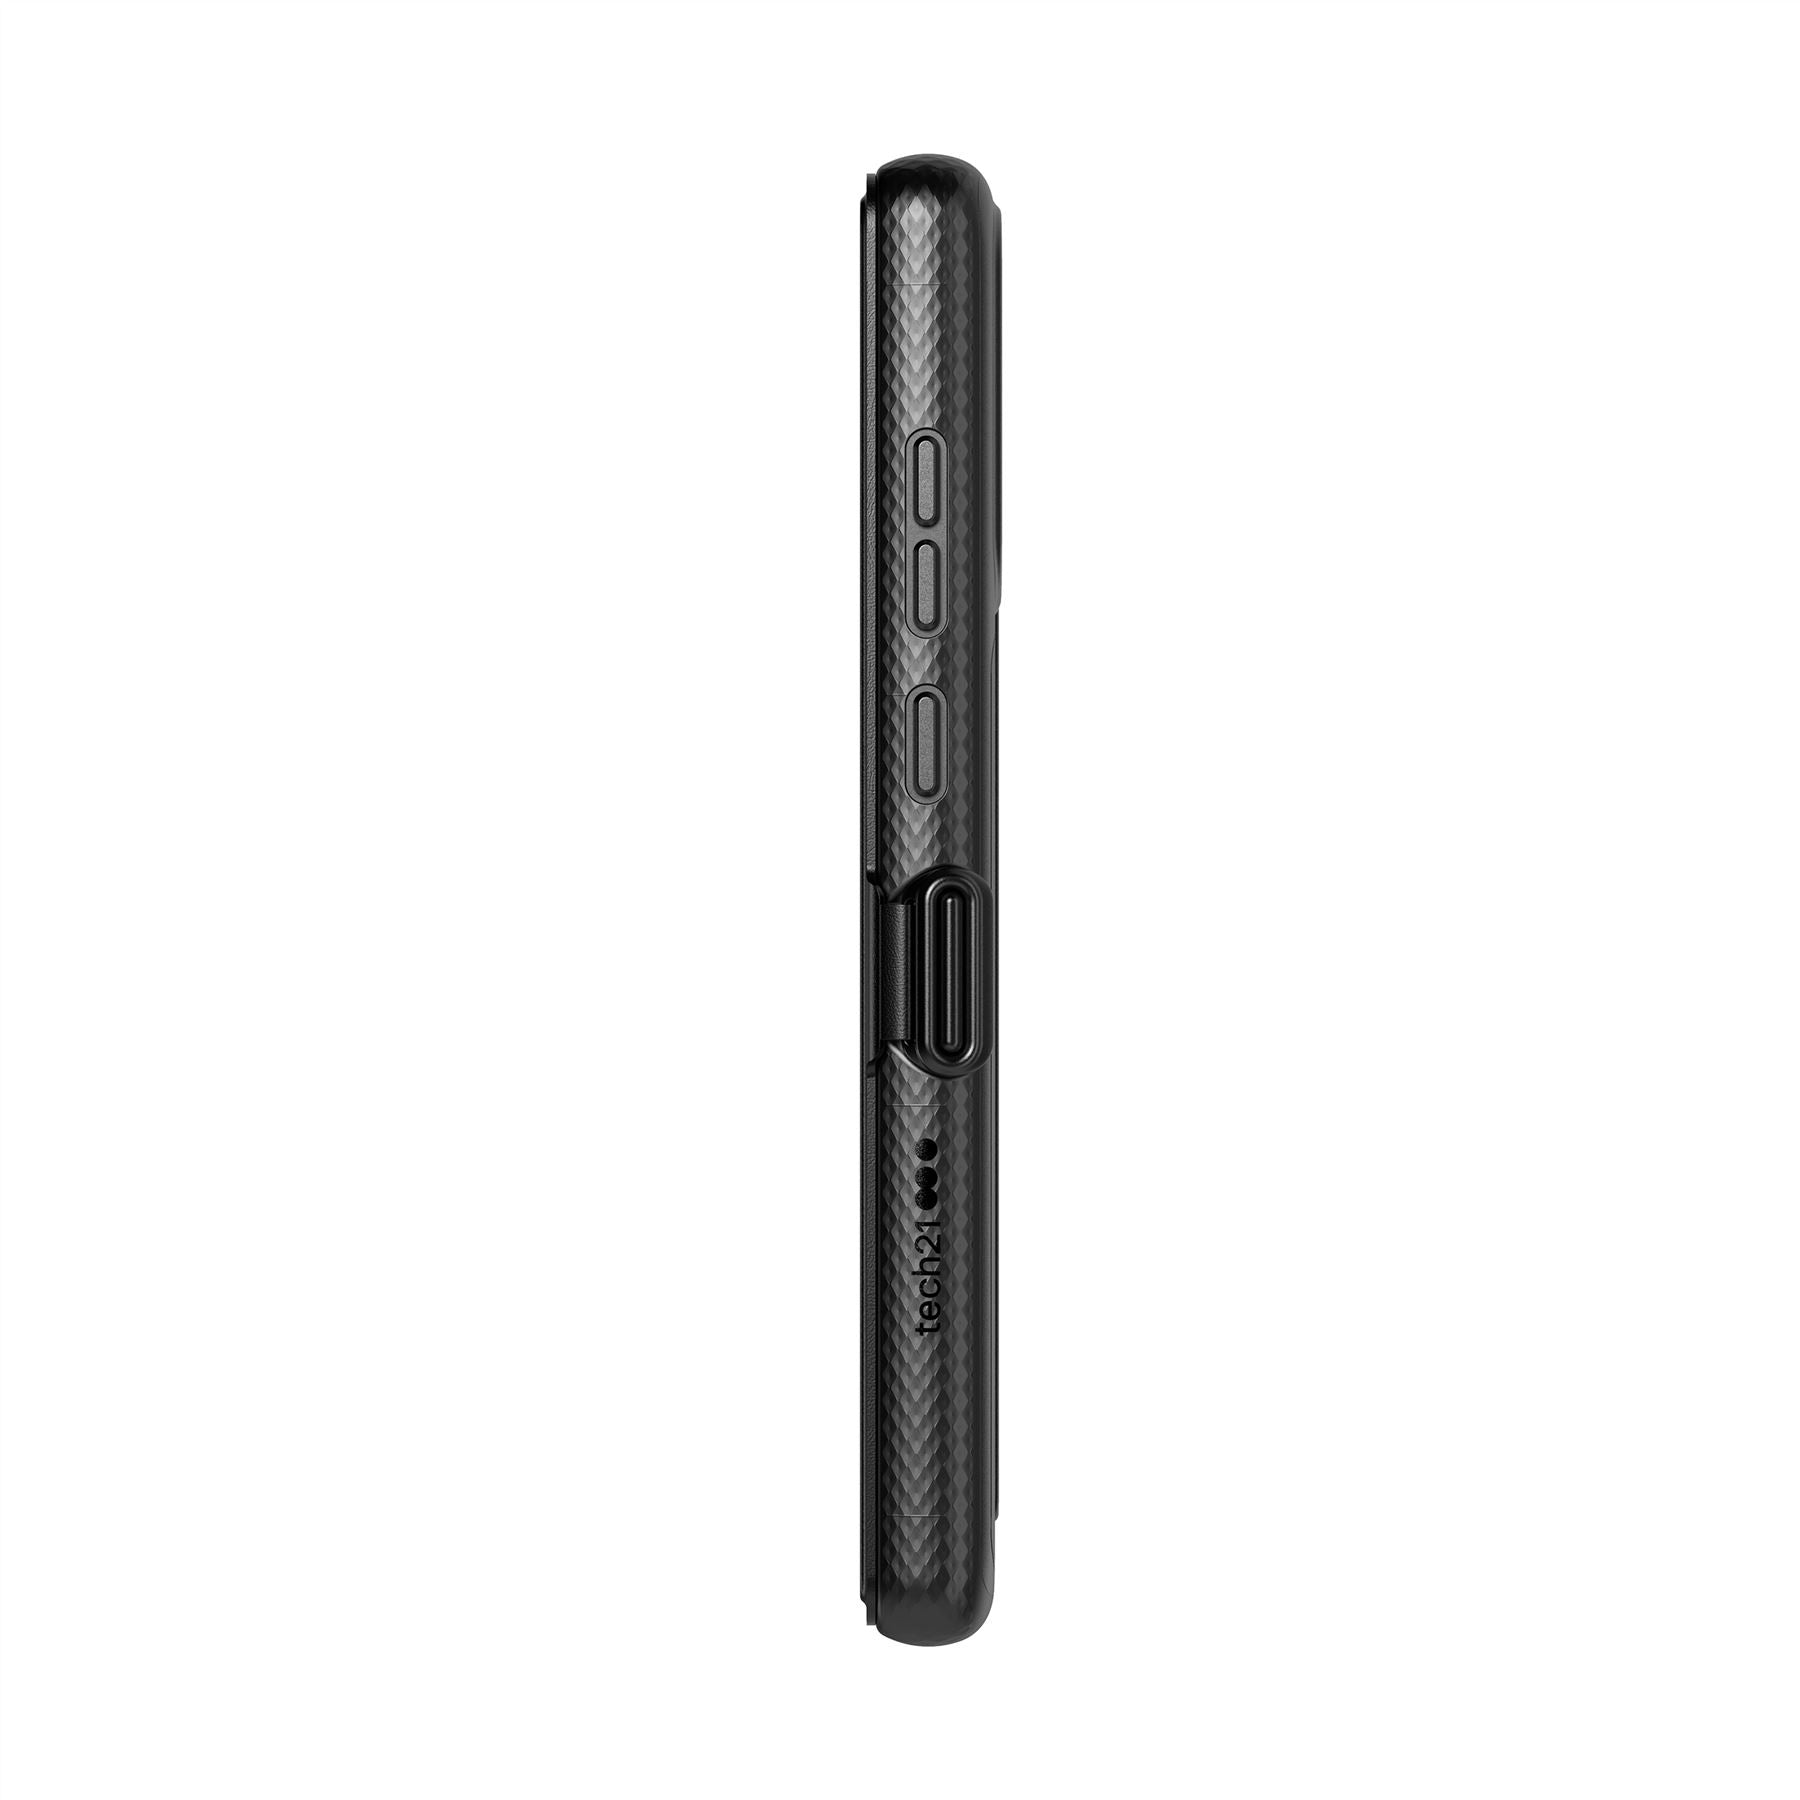 Evo Wallet - Samsung Galaxy Note20 Case - Black